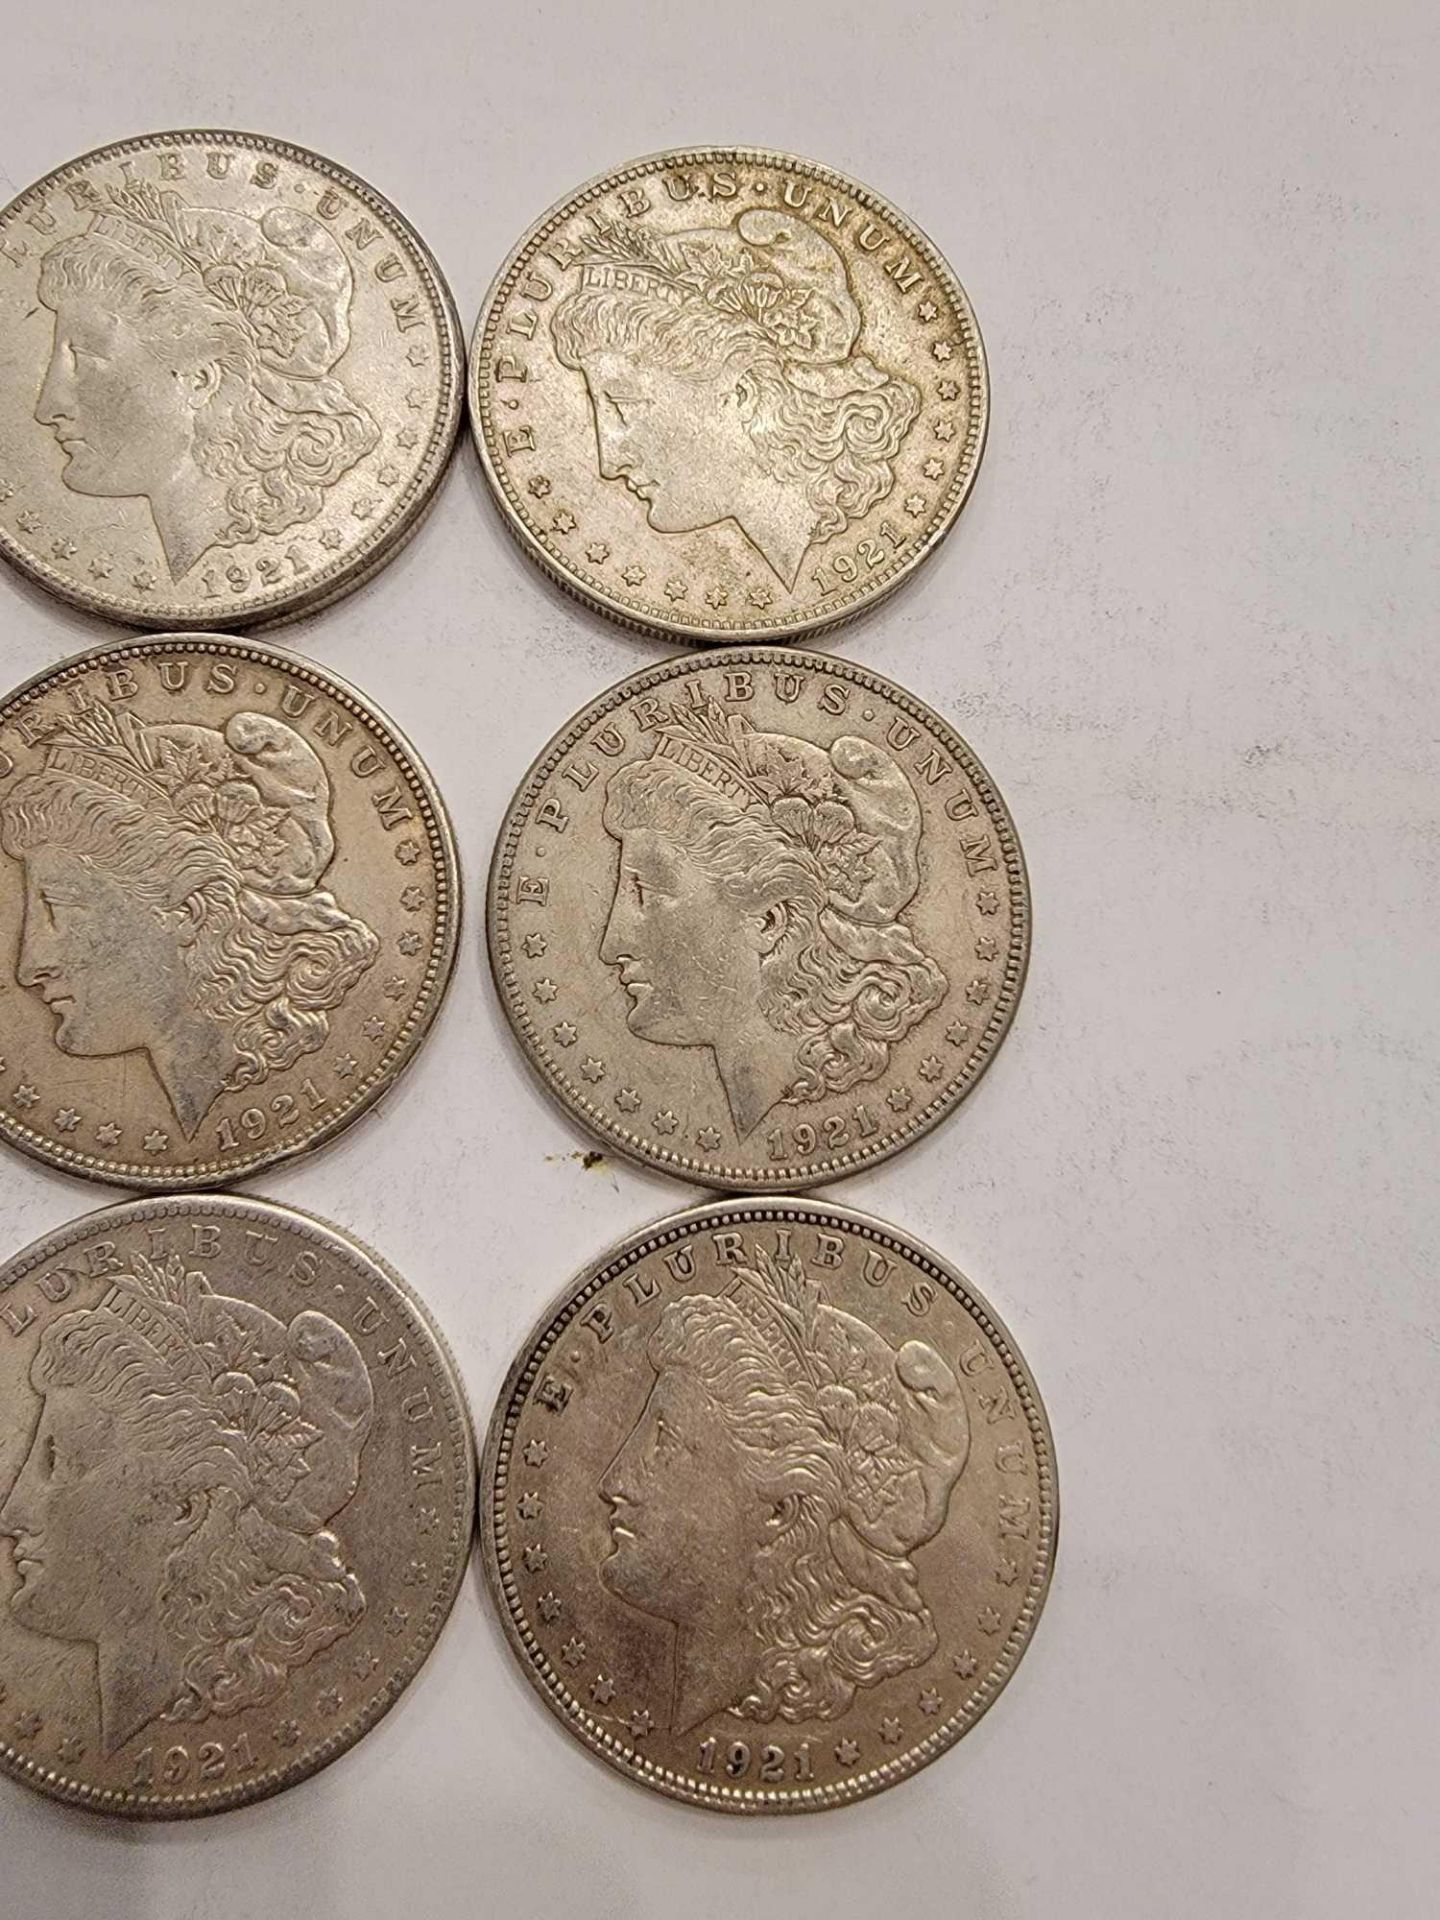 9 1921 morgan dollars - Image 3 of 6